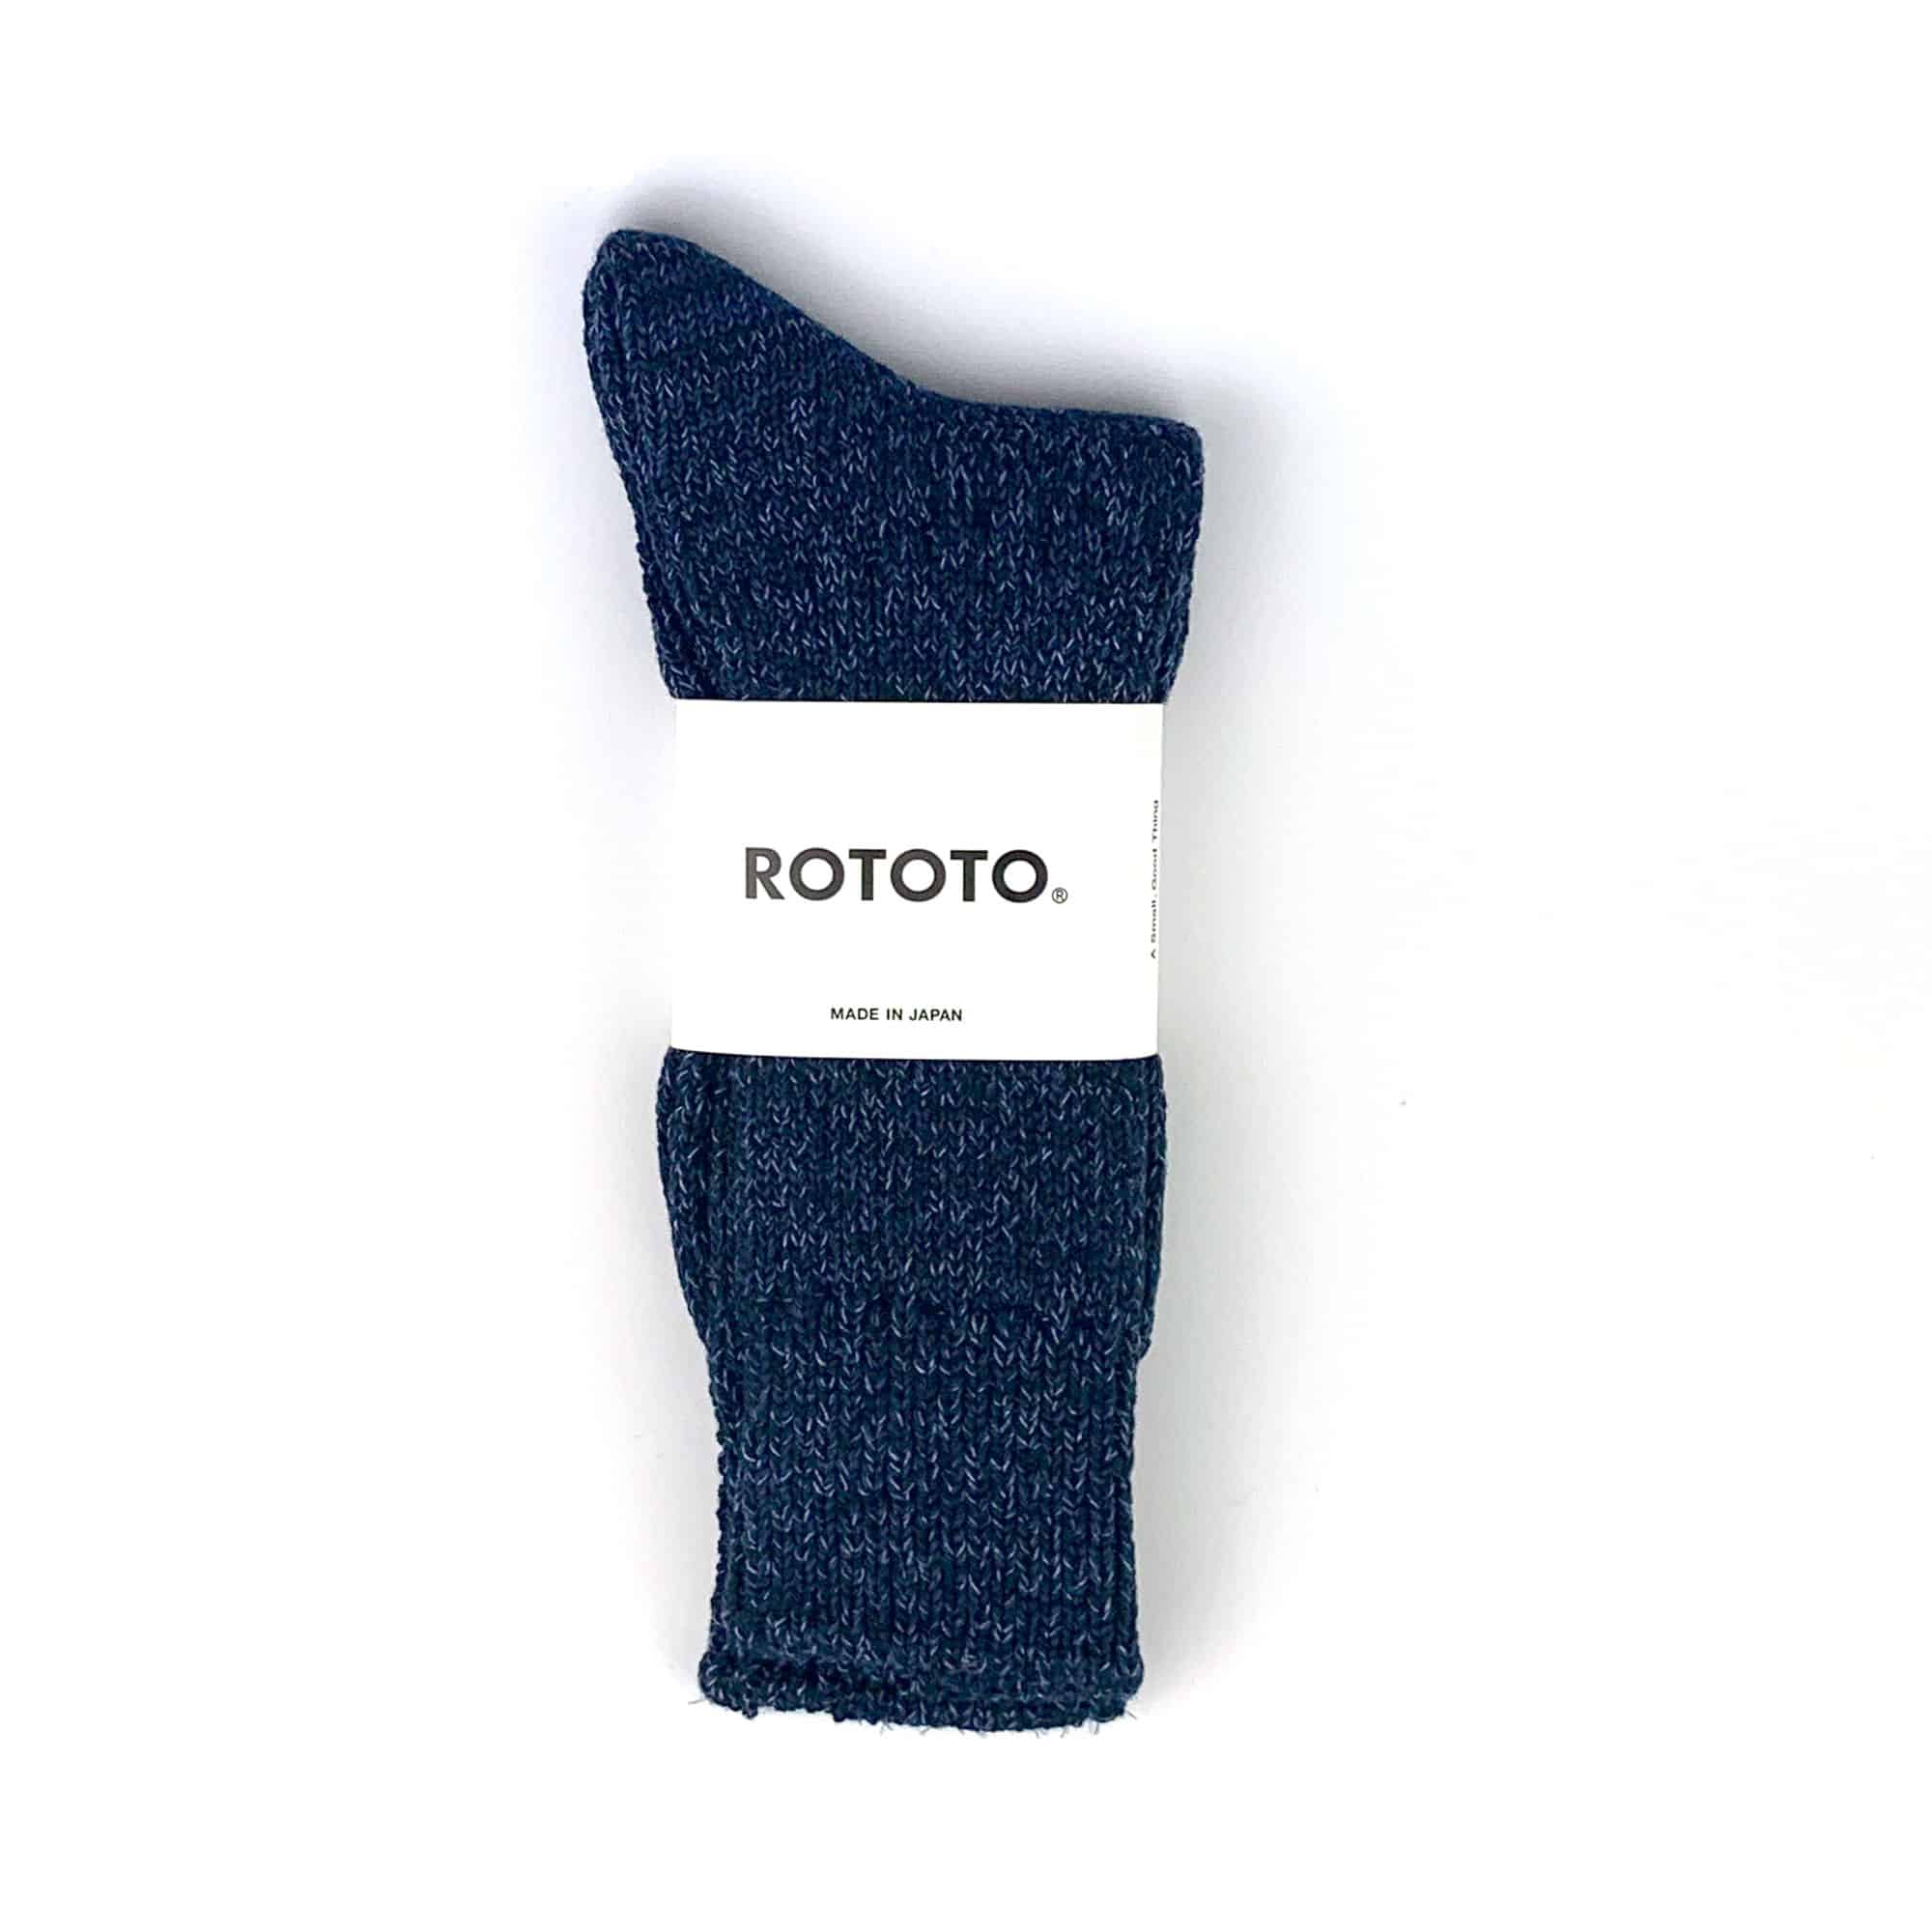 RoToTo Denim Tone Crew Socks - Dark Denim • Those That Know